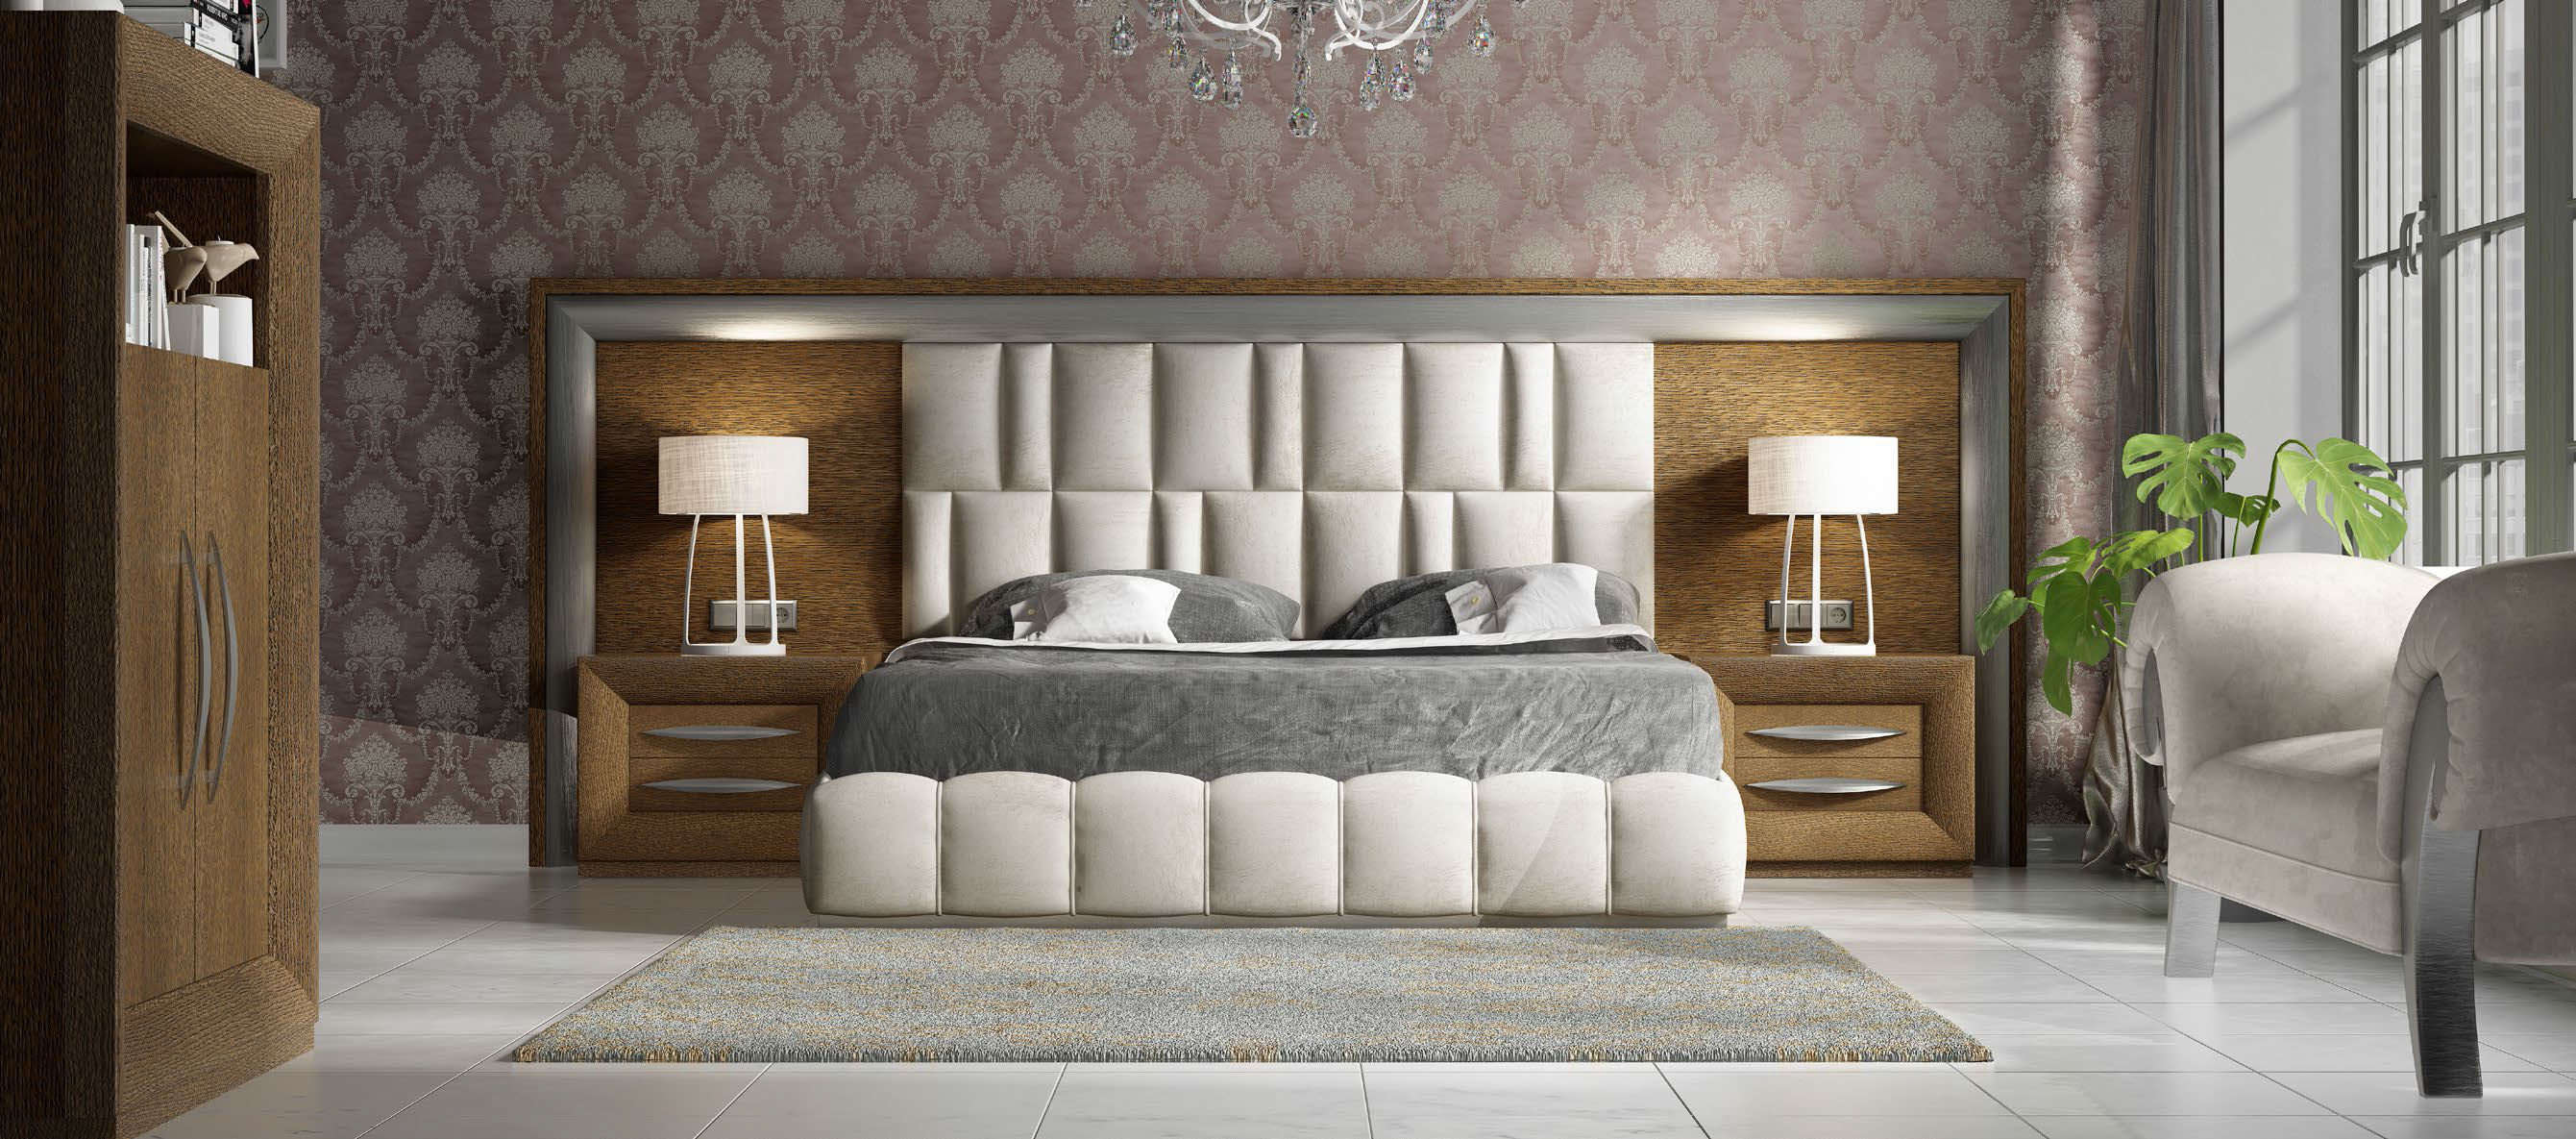 Brands Franco Furniture Bedrooms vol3, Spain DOR 116